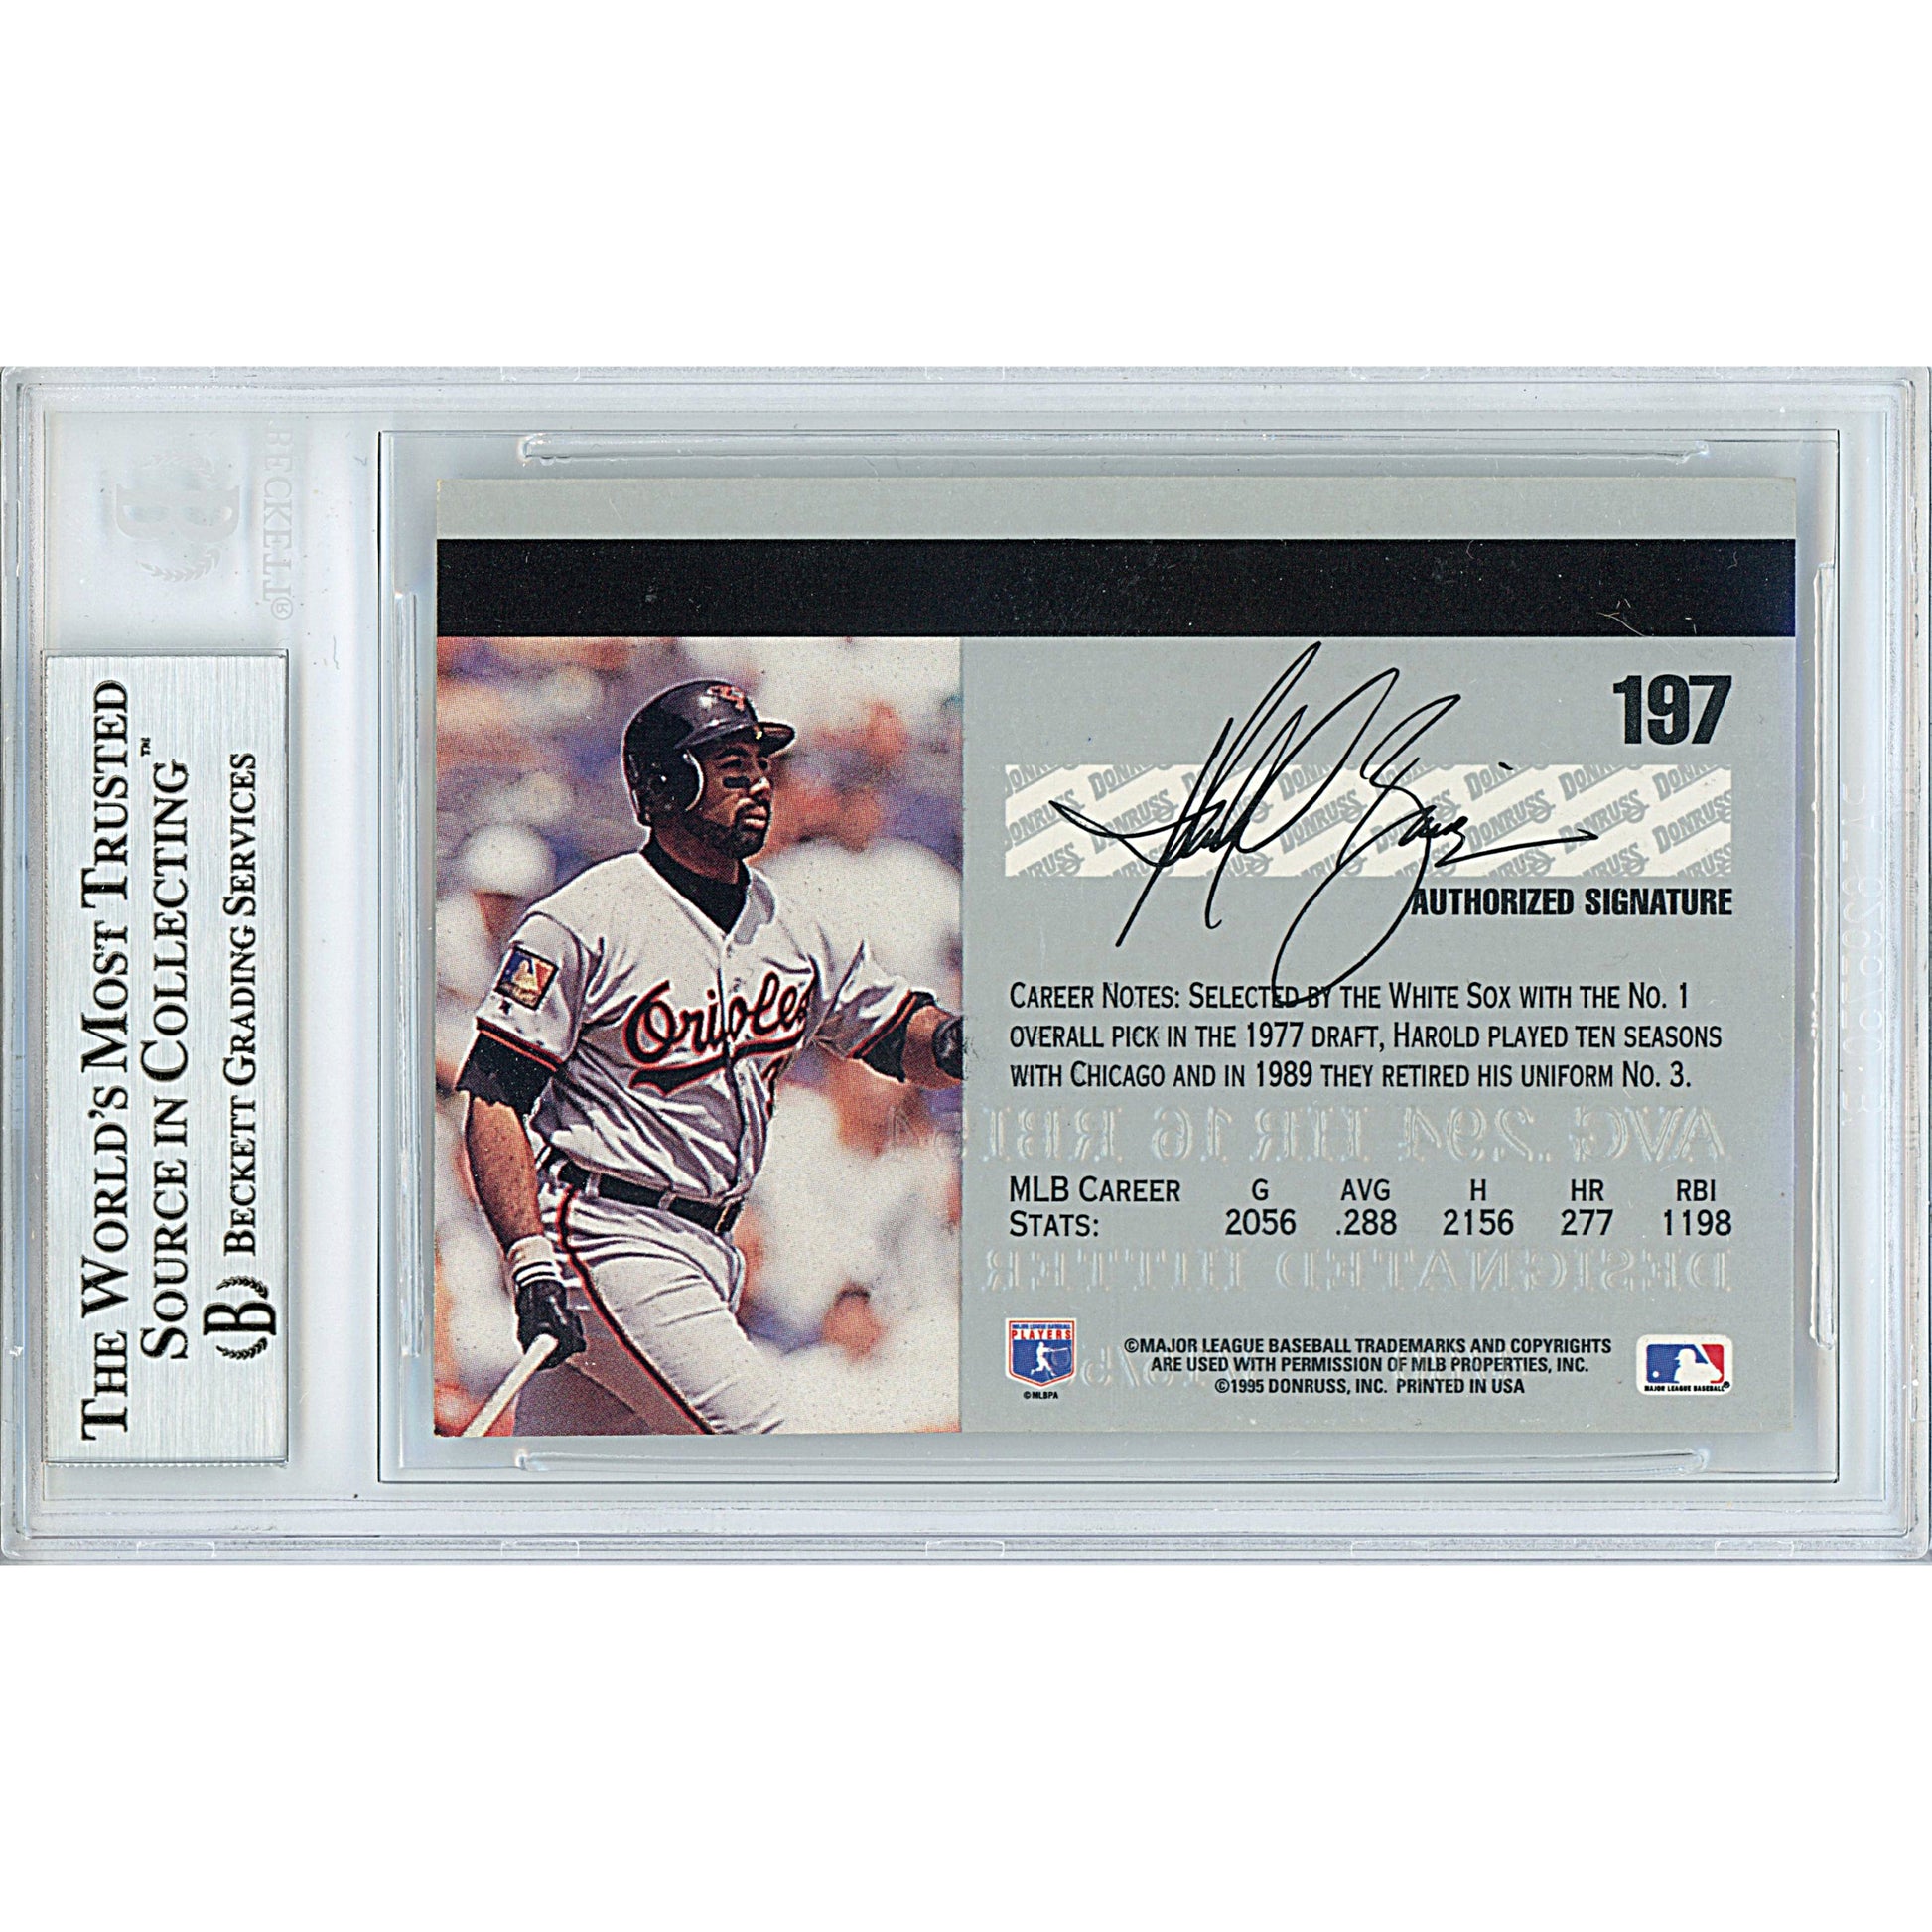 Harold Baines Autographed Baltimore Orioles 1995 Donruss Studio Baseball  Trading Card Beckett Slabbed